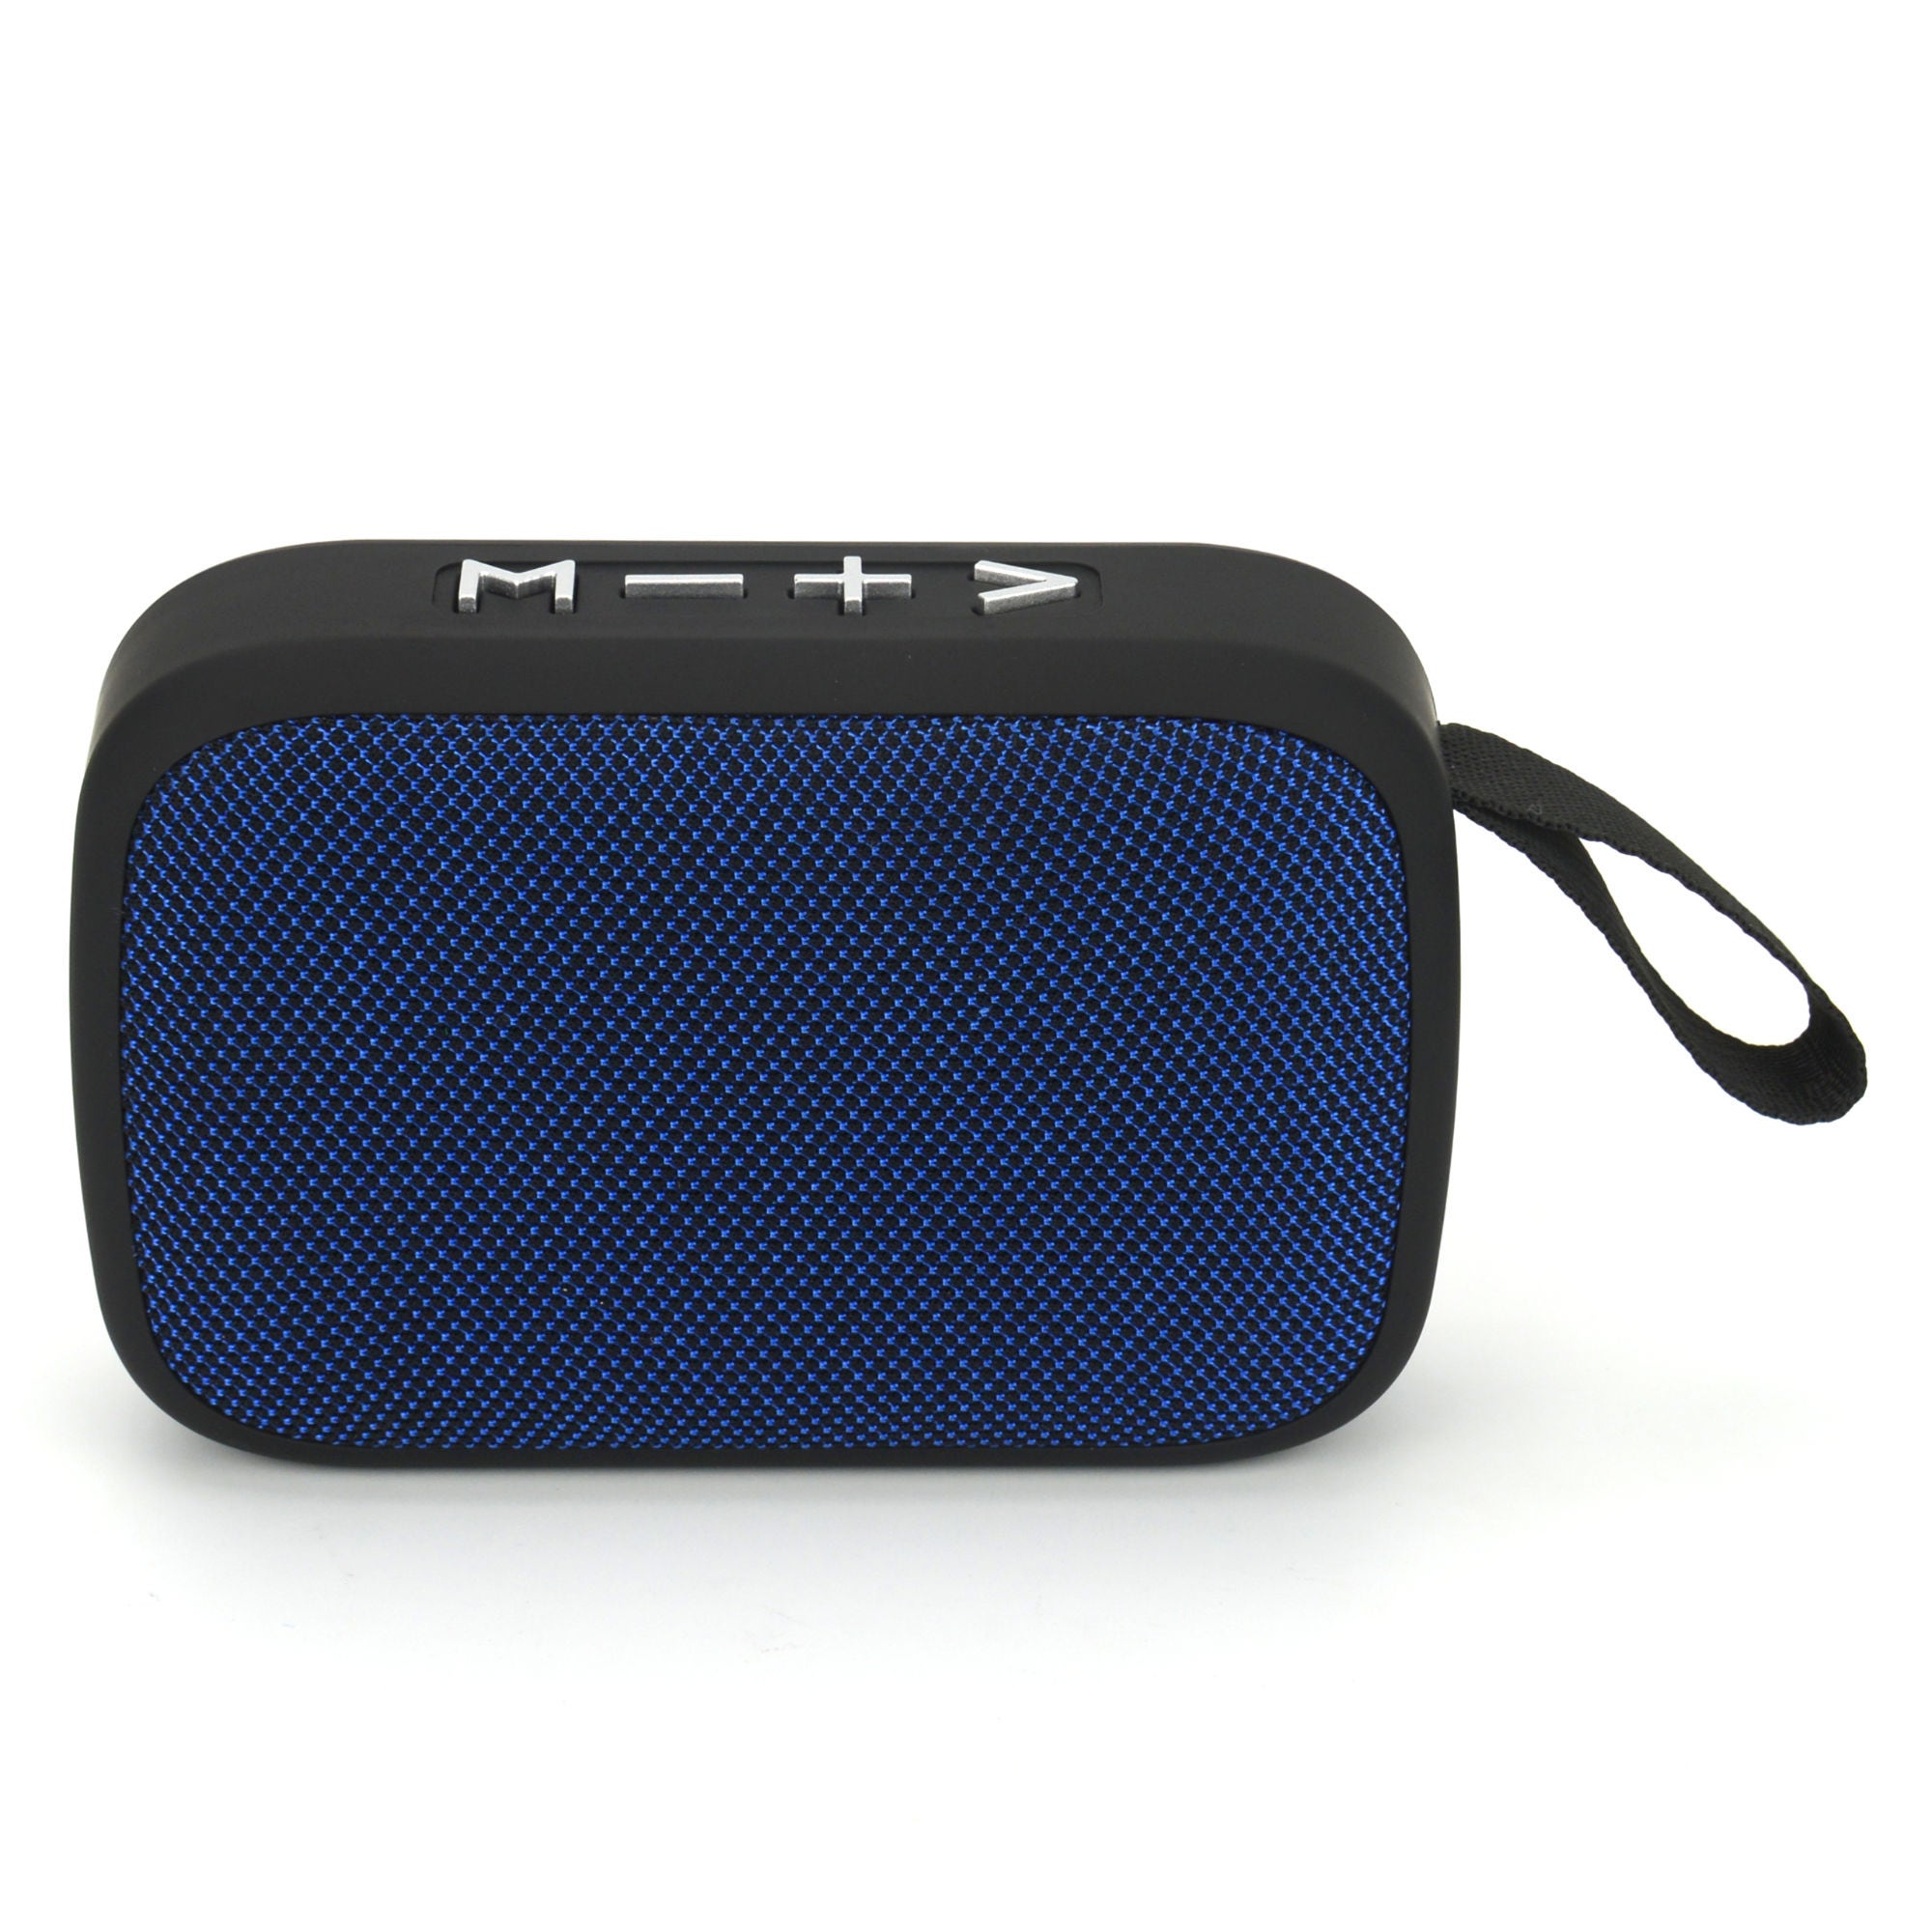 Boxa portabila activa Akai ABTS-MS89, Bluetooth, 3 W, USB, TF card reader, radio FM, diverse culori